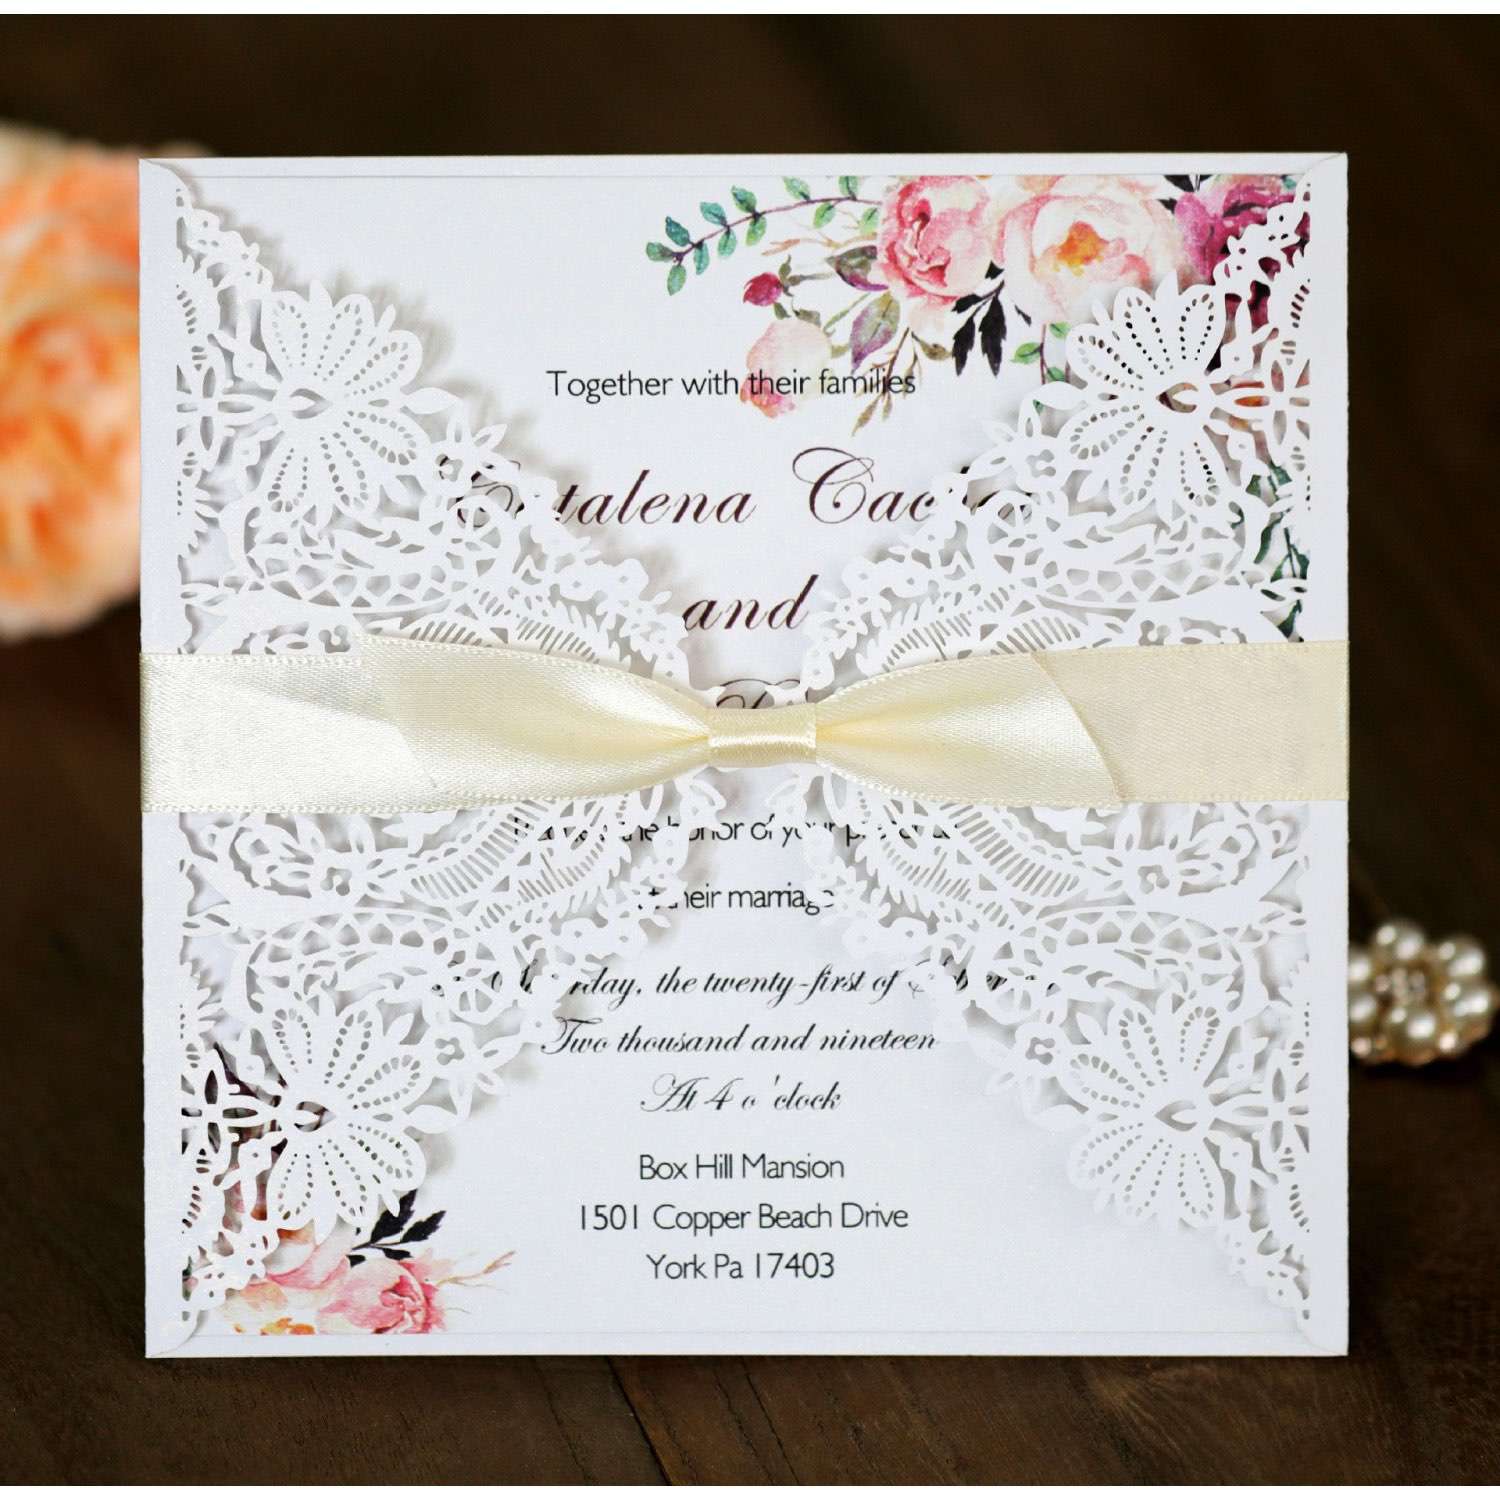 Vellum Paper Invitation Card With Hemp Rope Wedding Invitation With Ribbon Bow